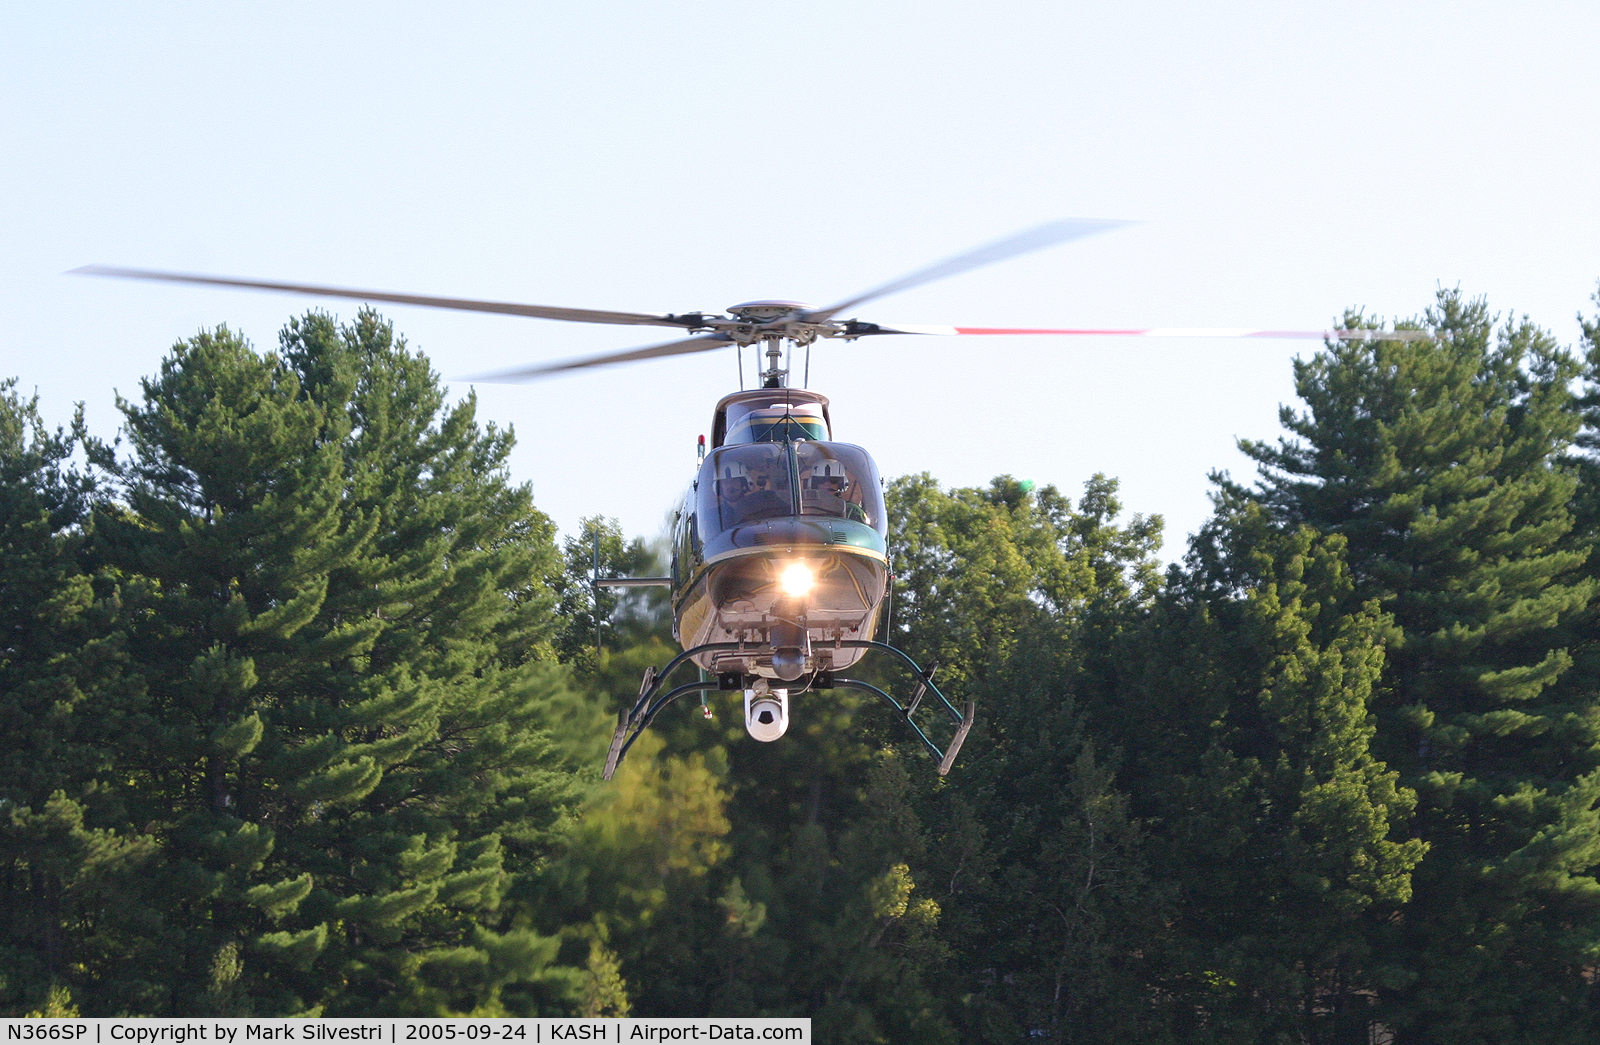 N366SP, 2002 Bell 407 C/N 53528, State Police Helo hovering at Daniel Webster College Airshow 2005